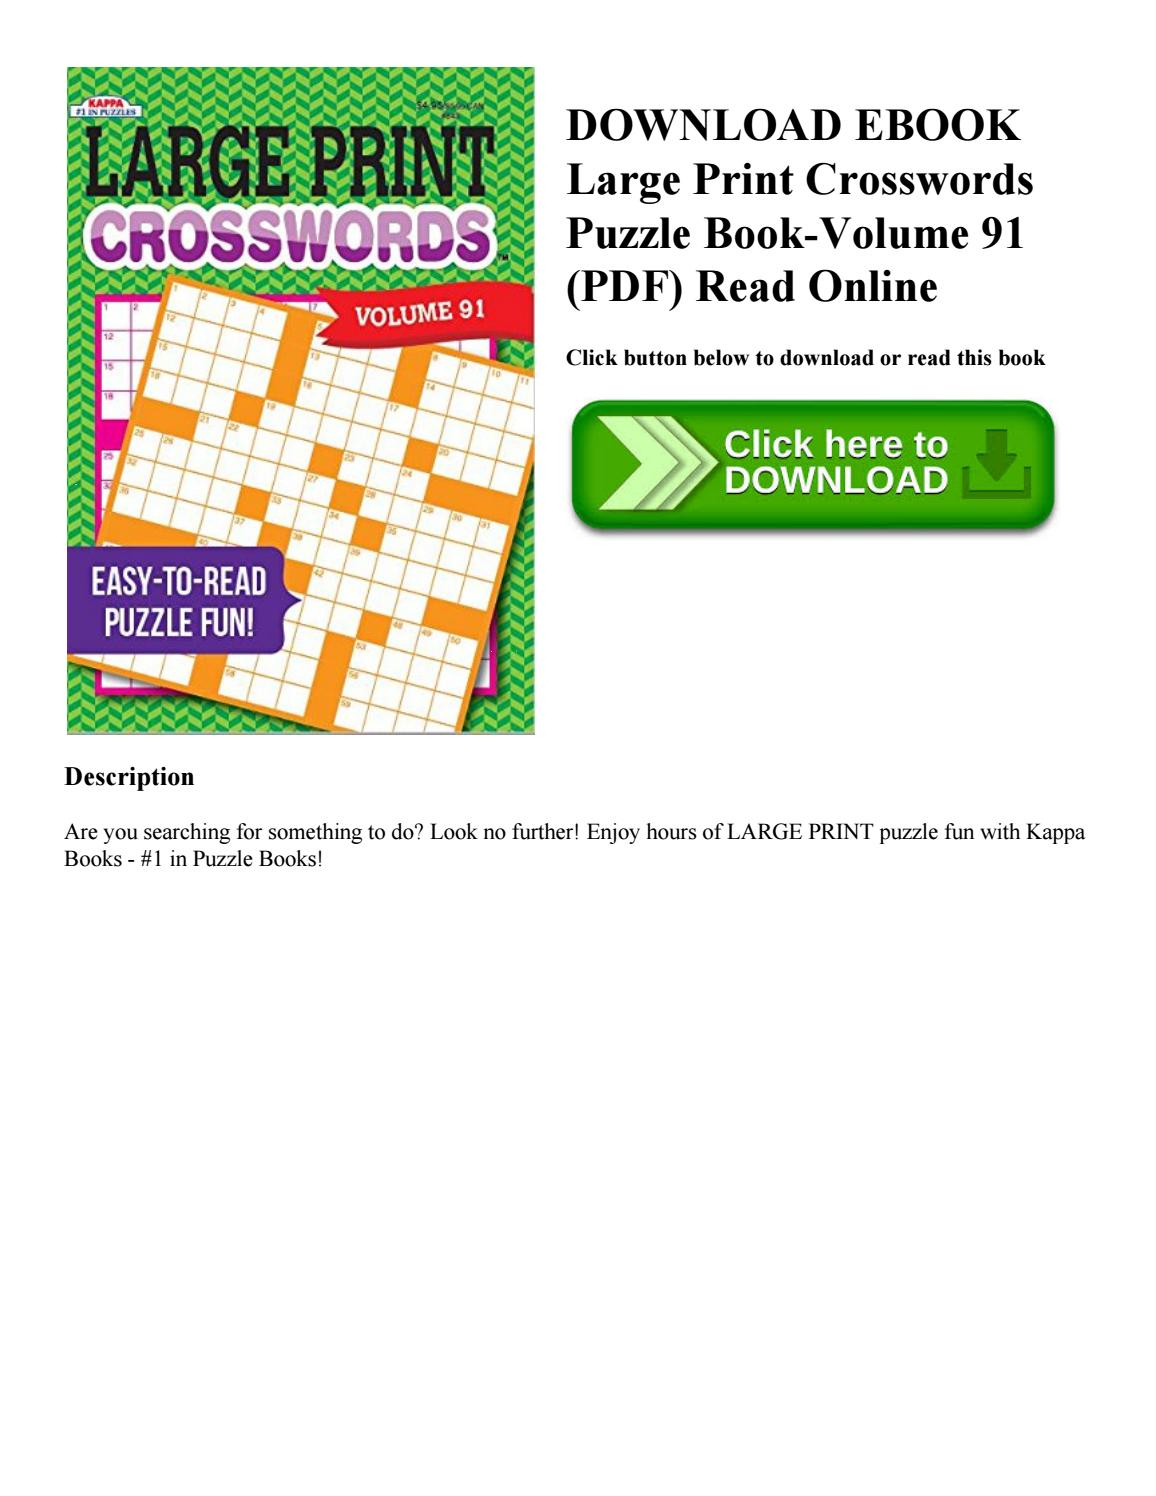 Download Ebook Large Print Crosswords Puzzle Book Volume 91 (Pdf - Printable Puzzle Book Pdf